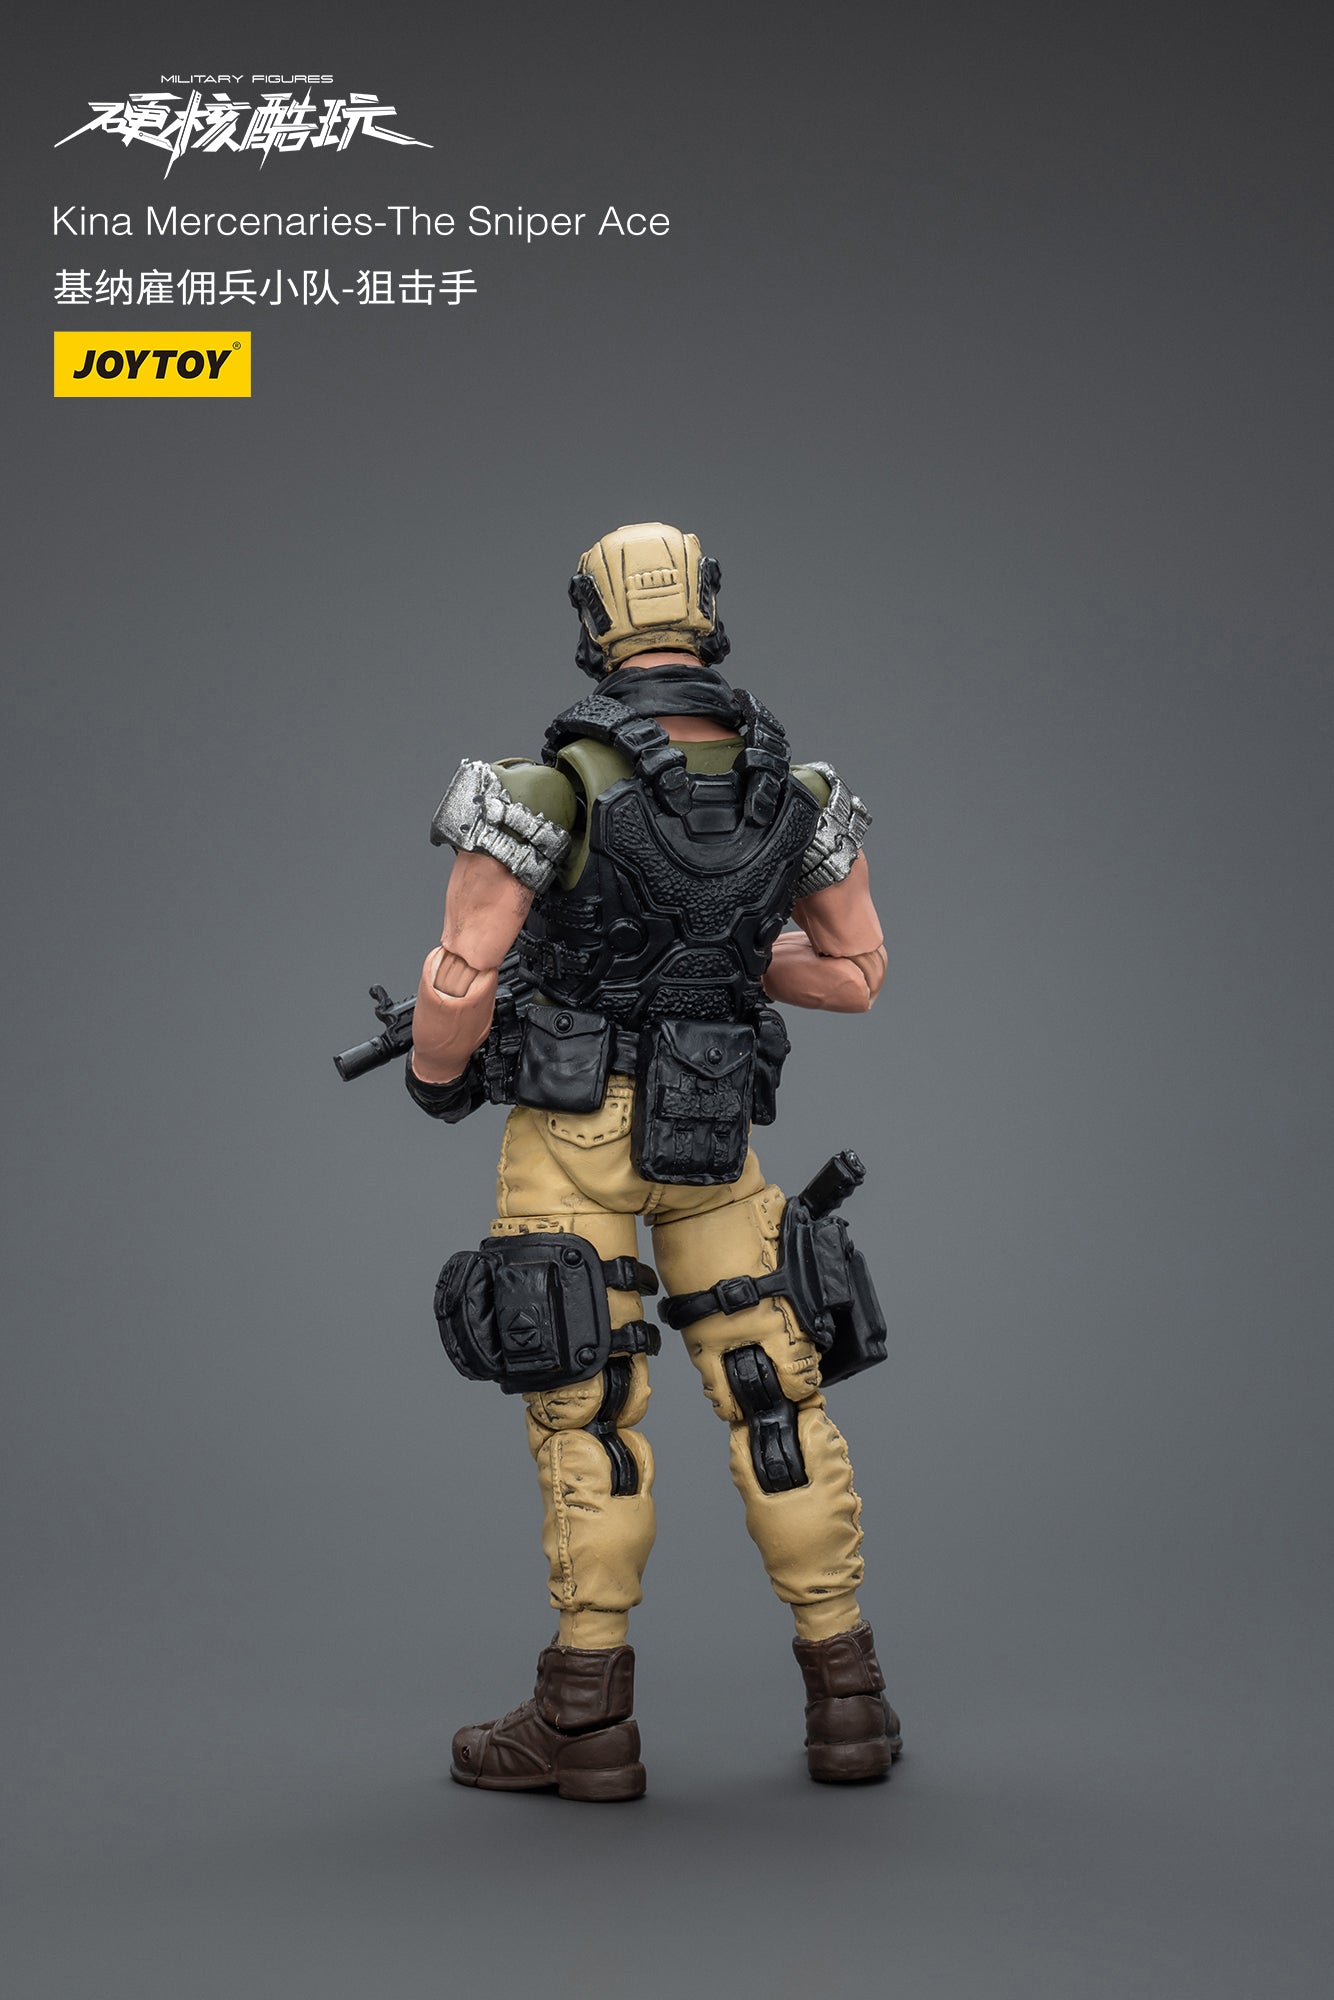 Kina Mercenaries-The Sniper Ace - Military Action Figure By JOYTOY